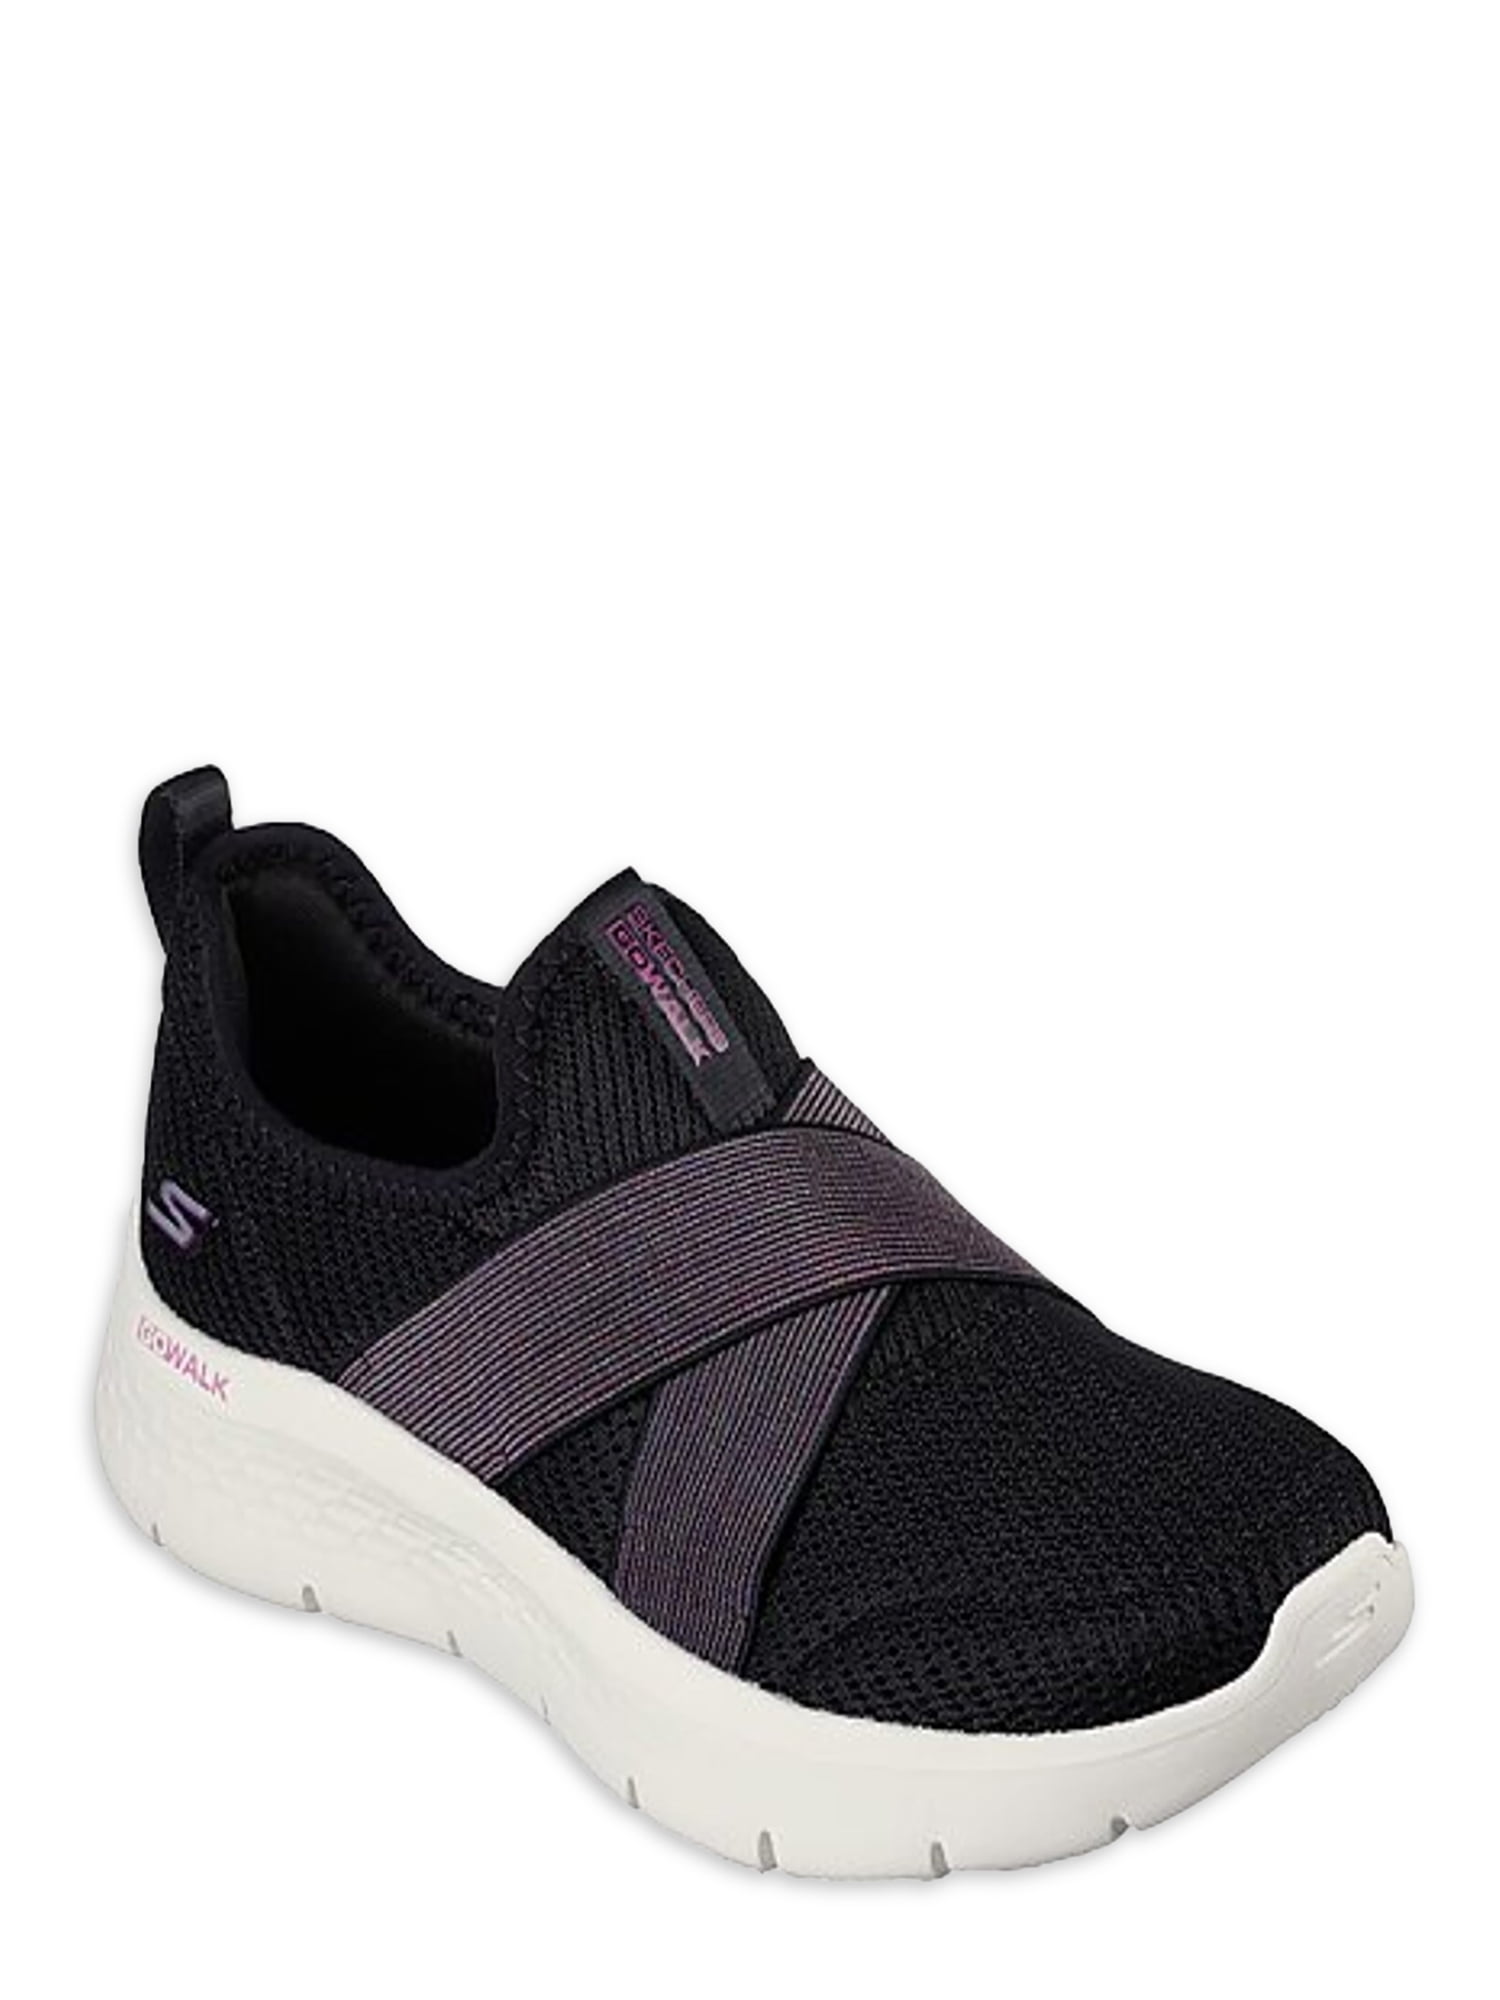 Skechers Go Flex Walk Womens Shoes (Grey)